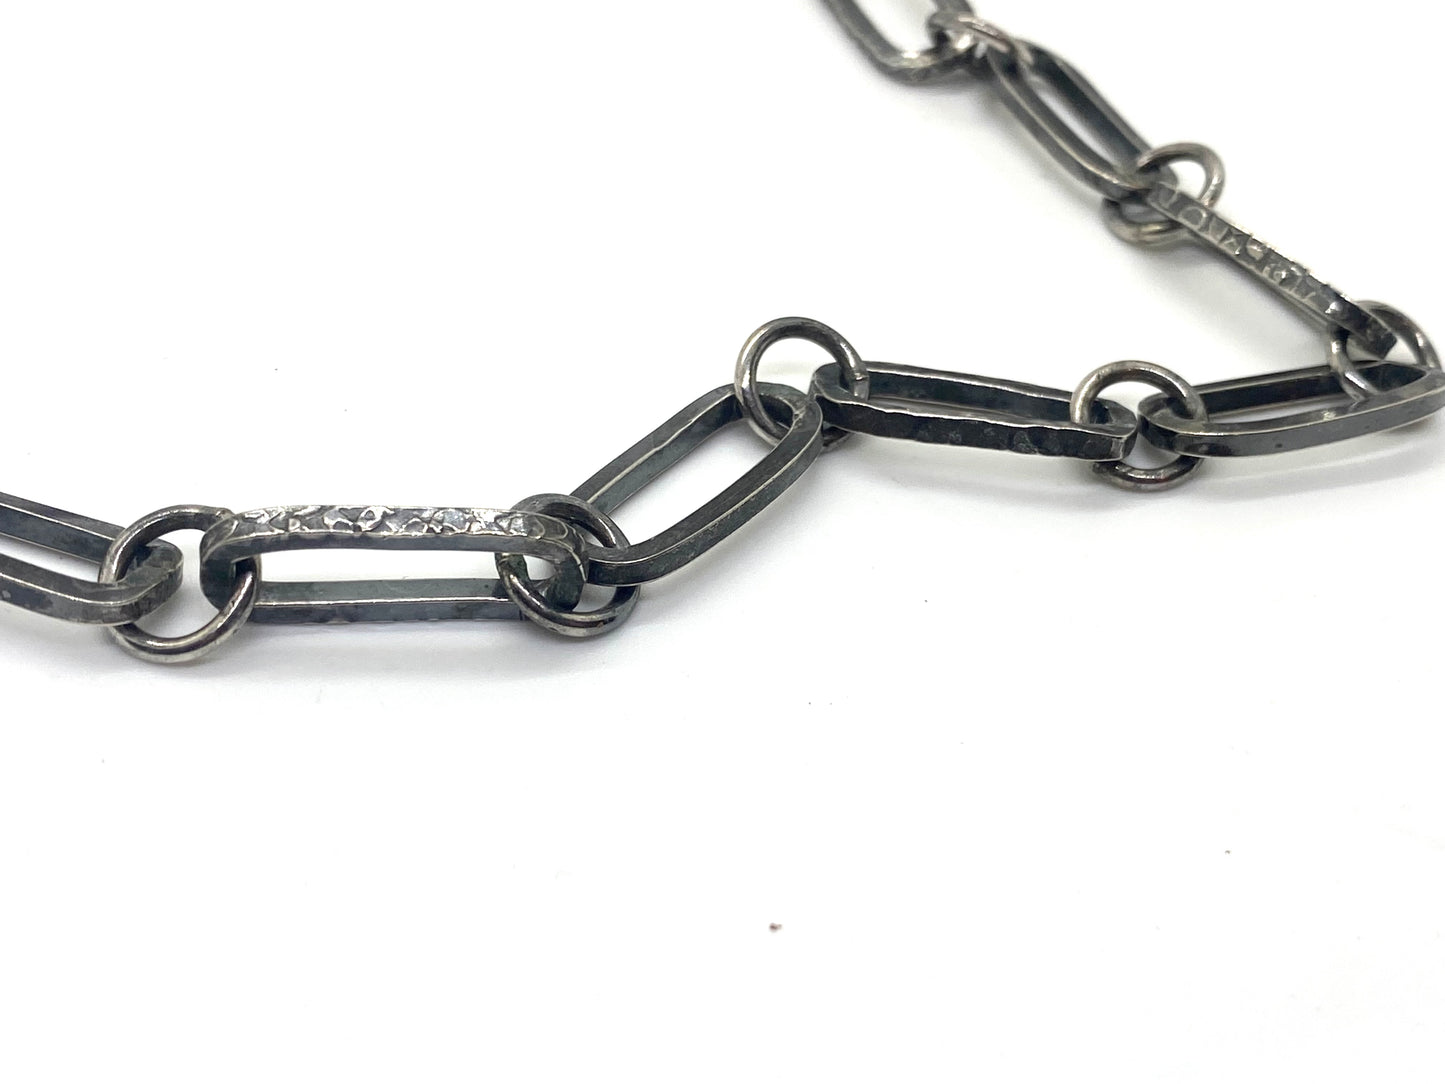 Handmade Chain large links